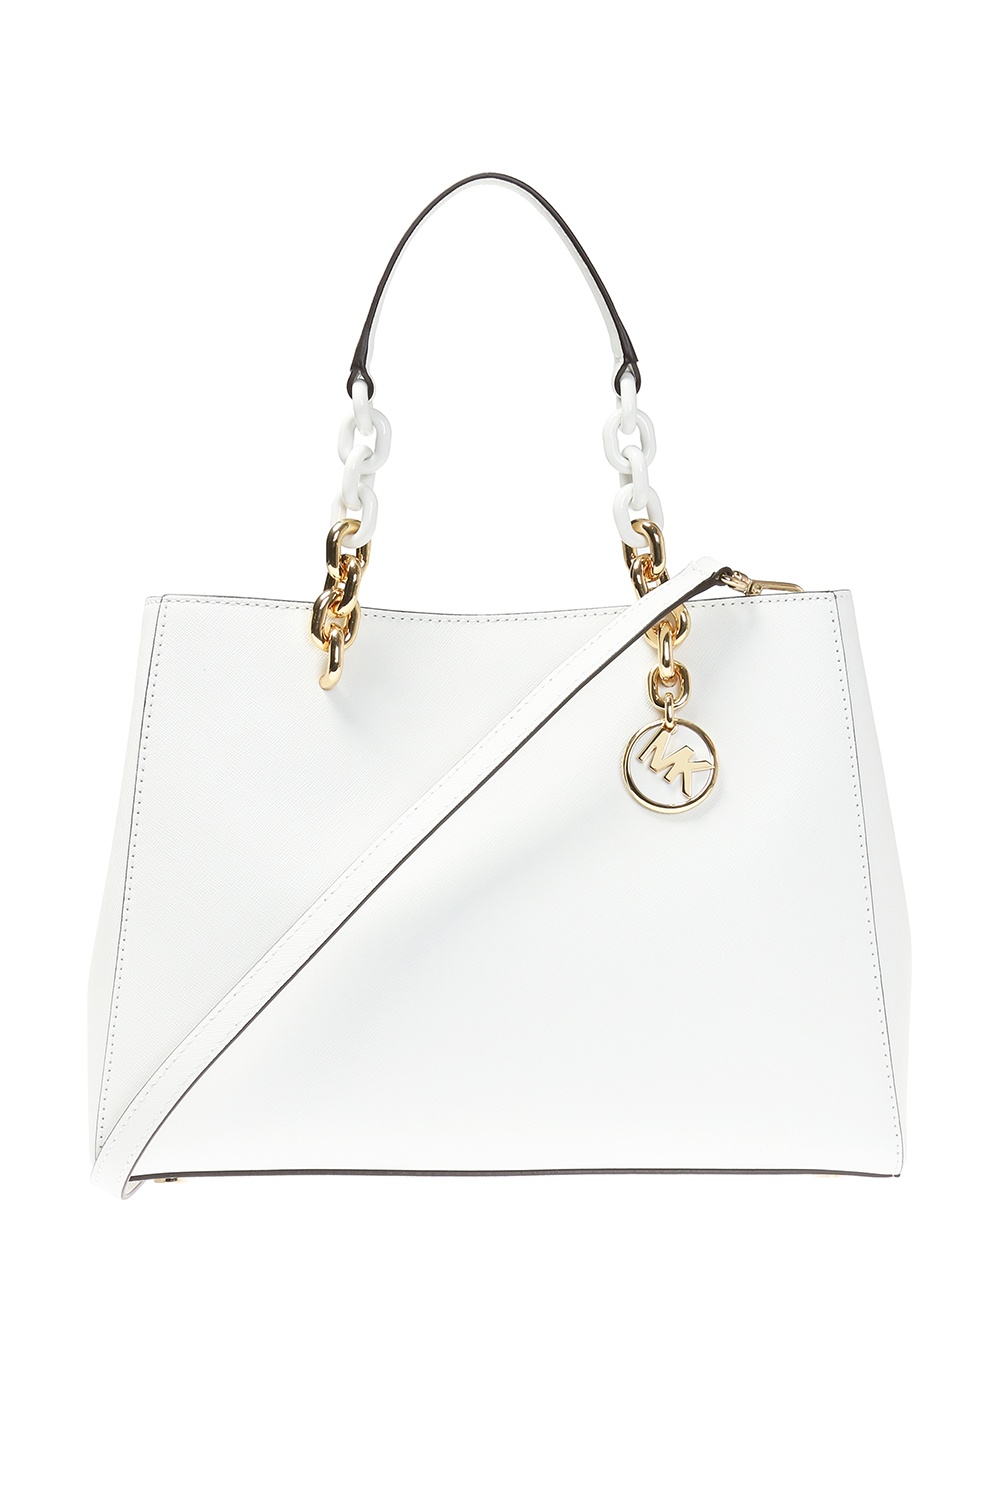 Michael Kors White Monogram Gold Chain Cynthia Tote Shoulder Bag